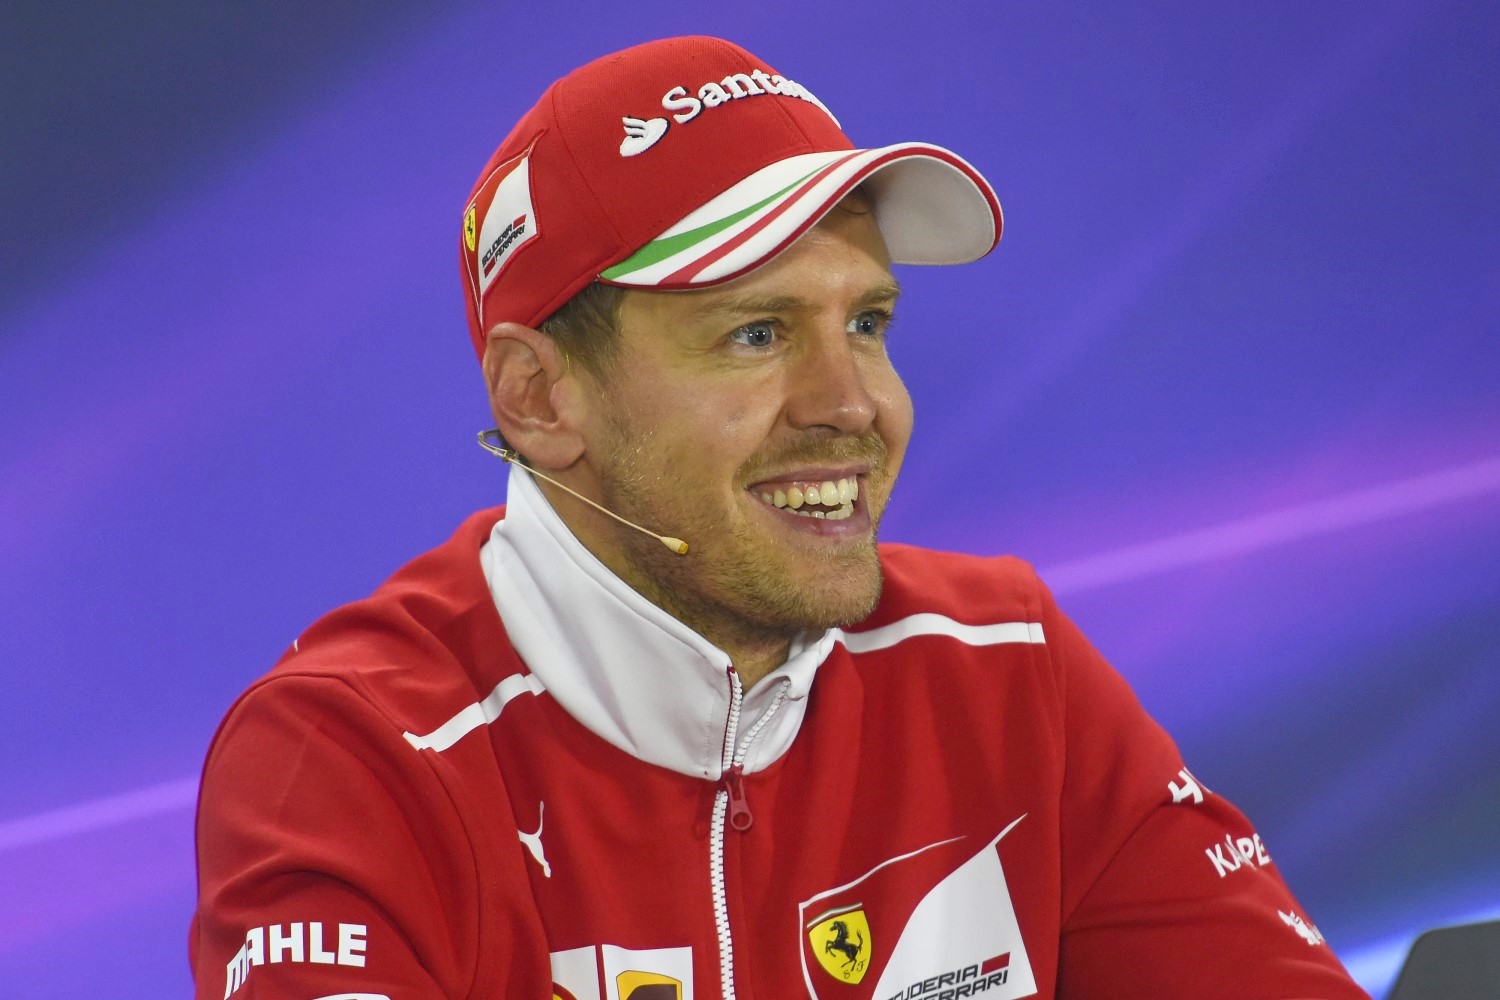 Vettel knows Bottas jumped the start